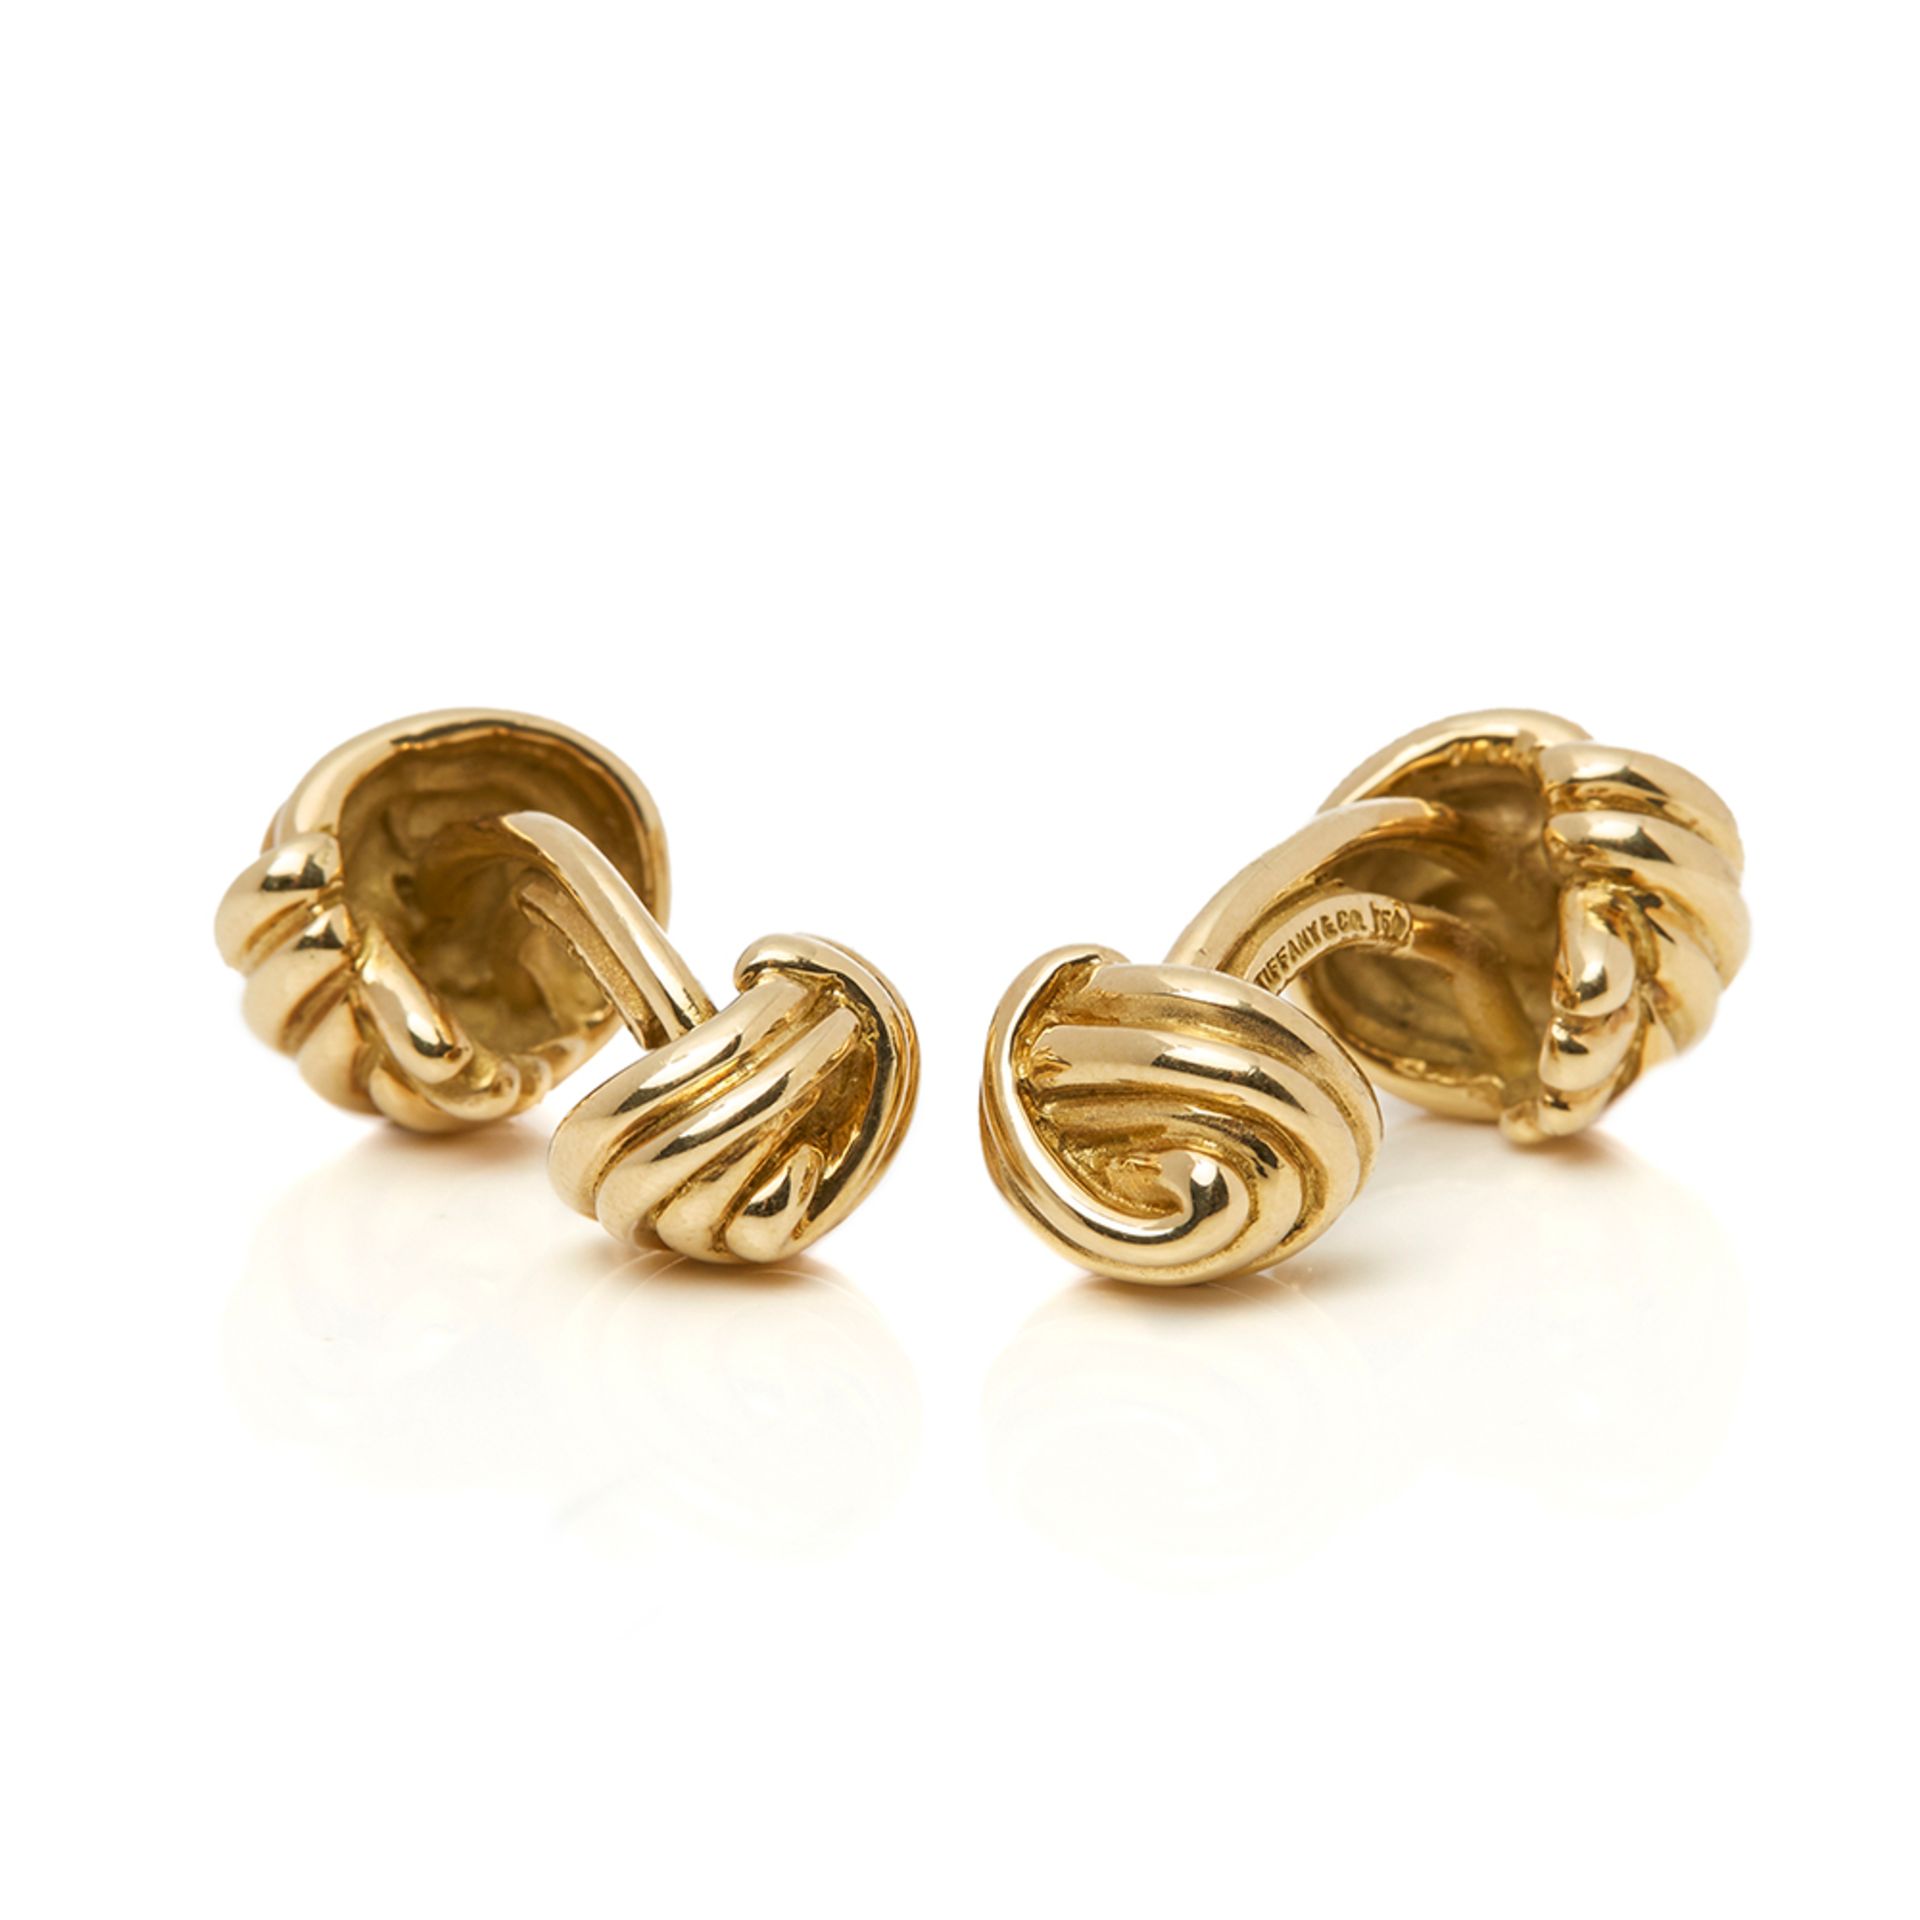 Tiffany & Co. 18k Yellow Gold Knot Cufflinks - Image 5 of 7